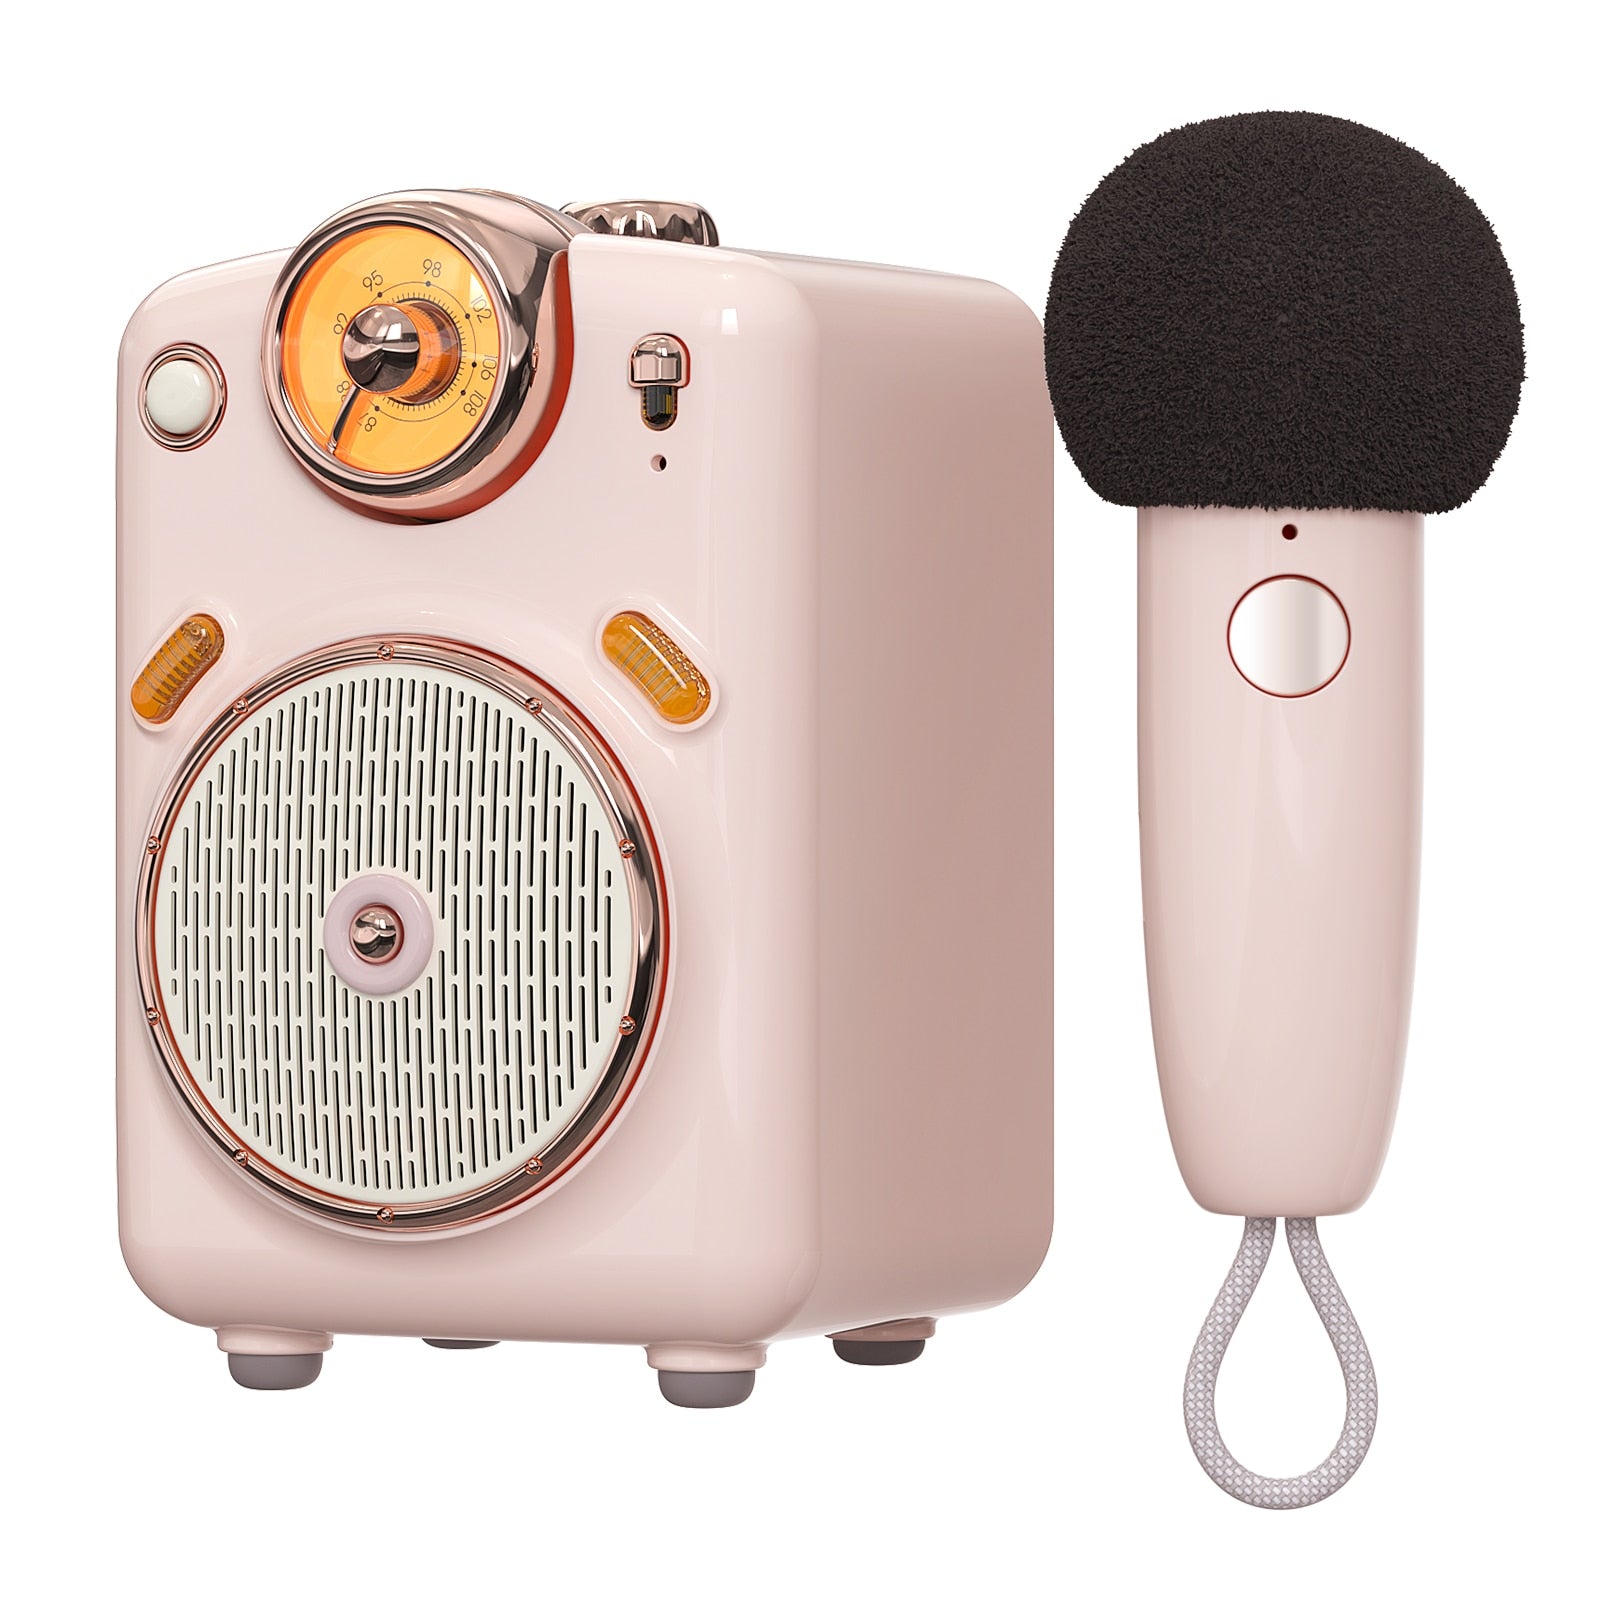 Divoom Fairy-OK Karaoke Speaker - Portable and Fun Audio